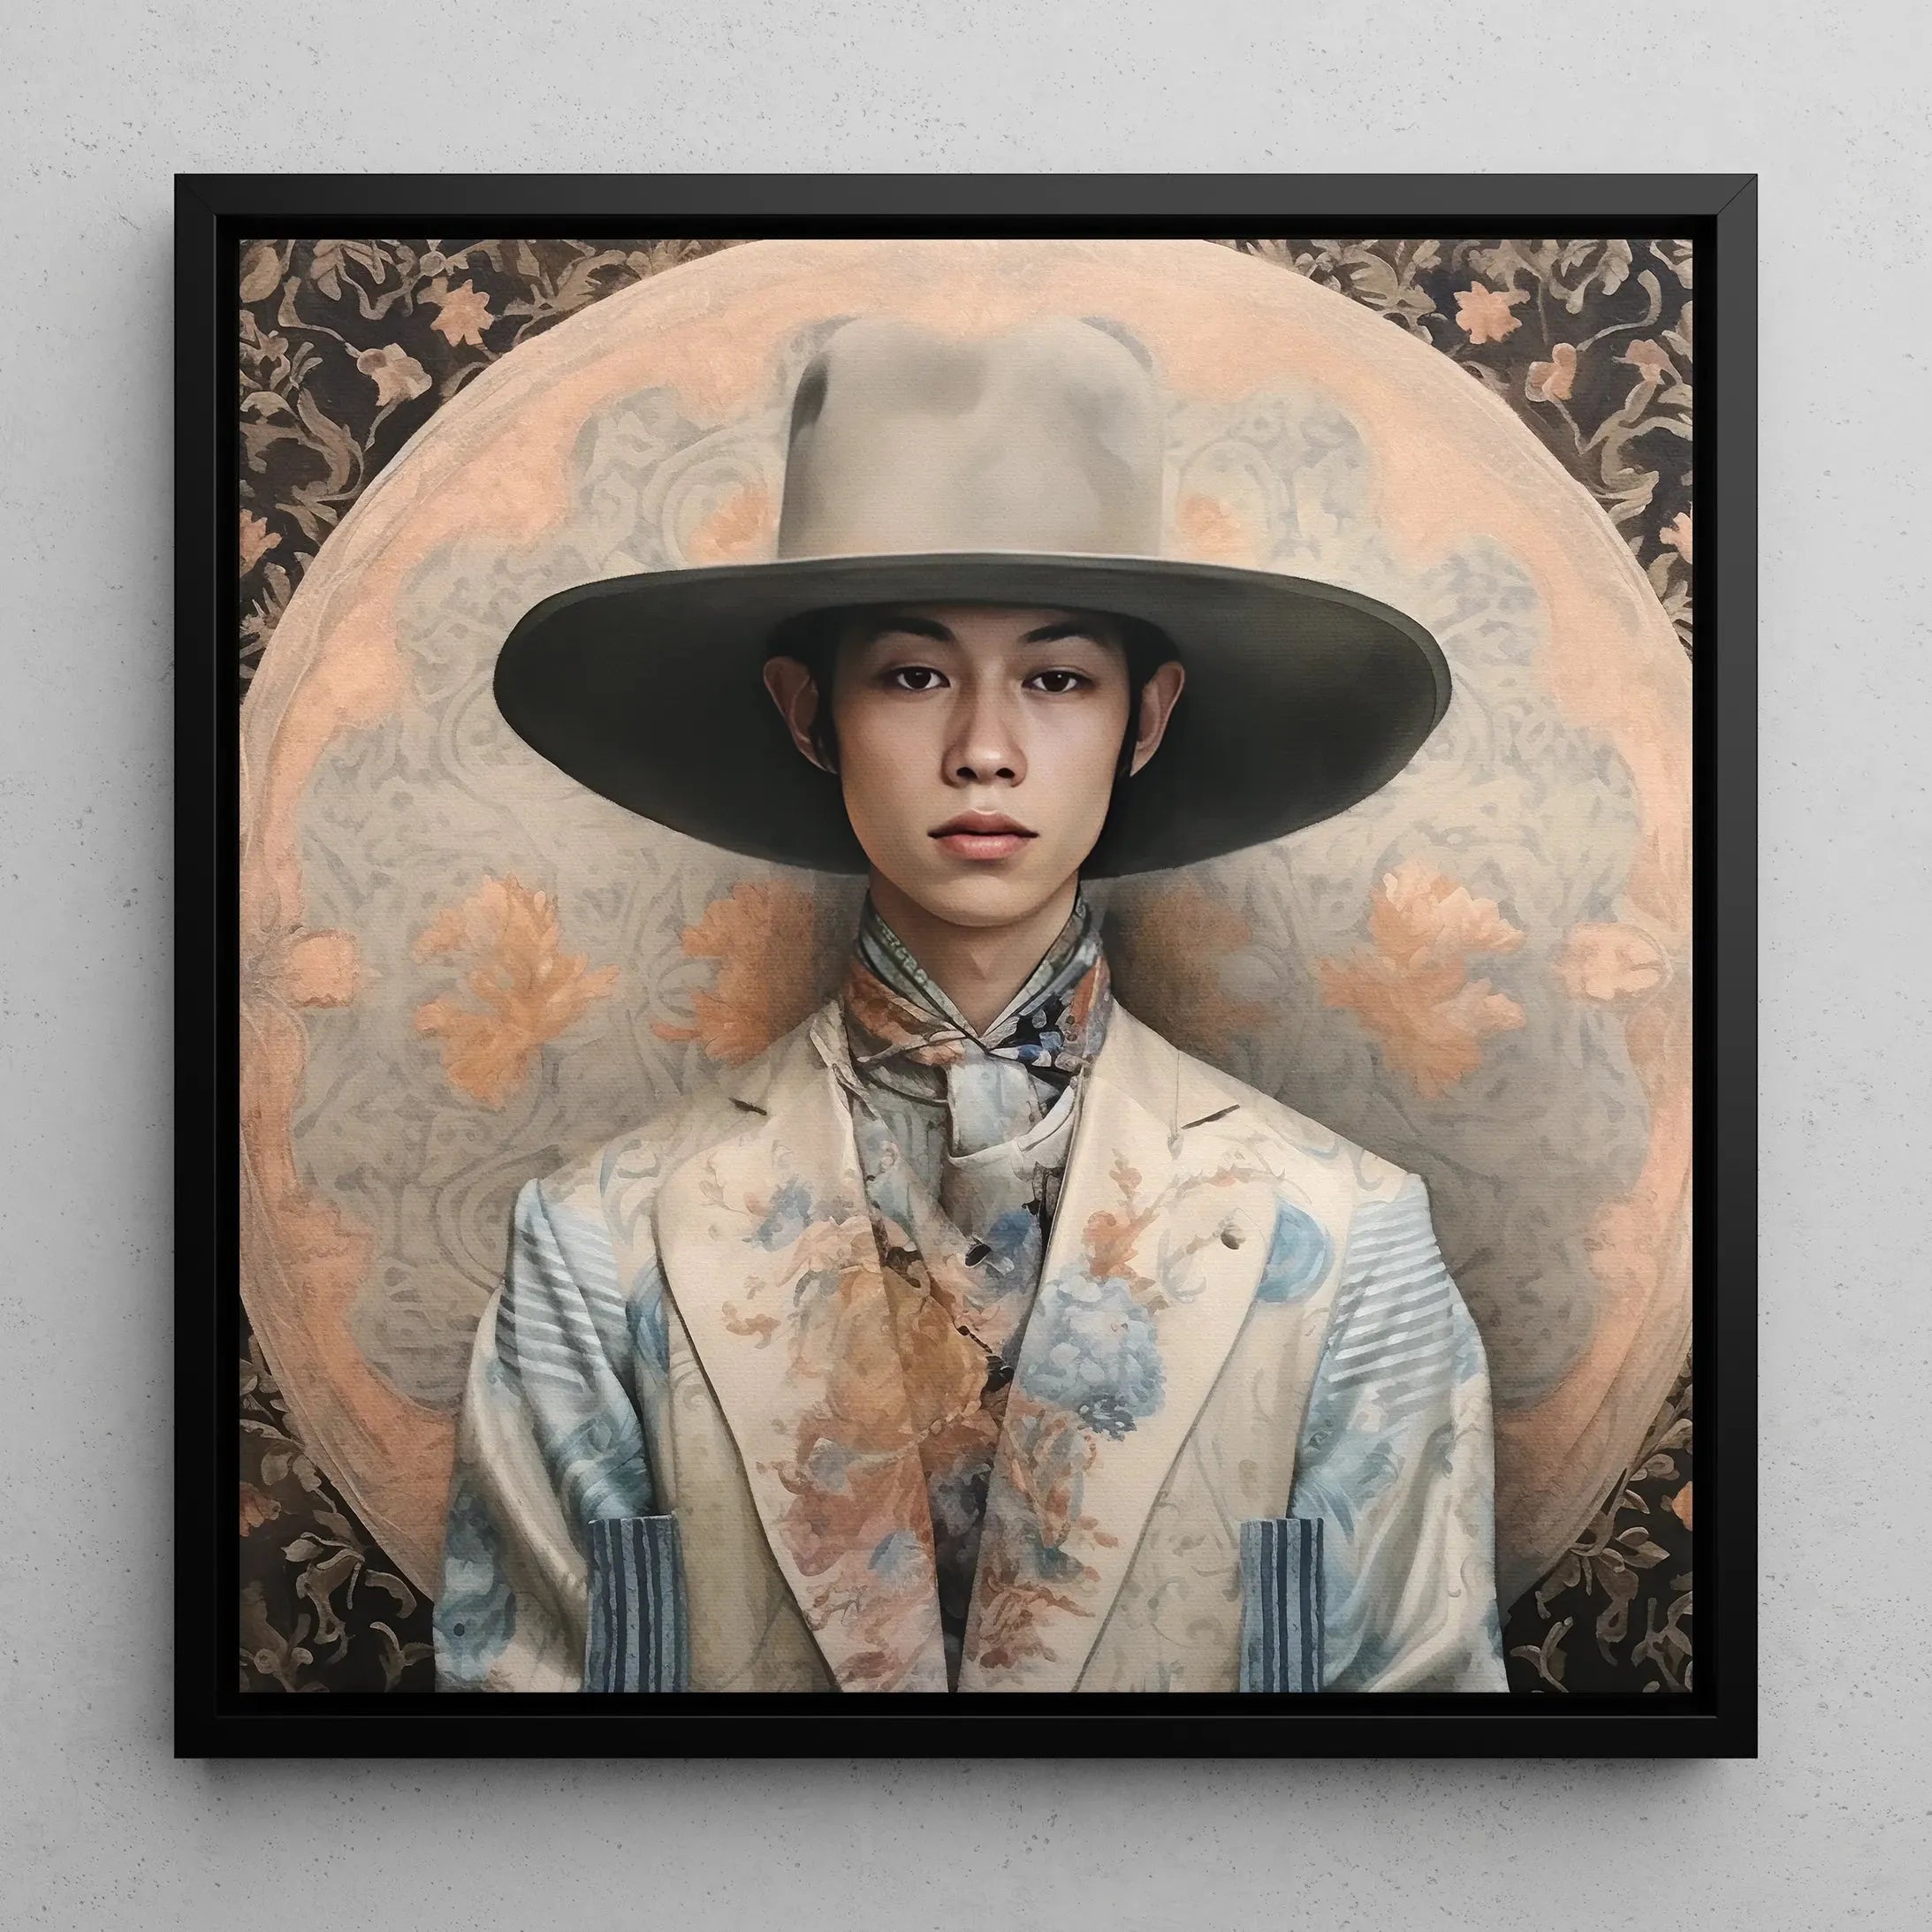 Thuanthong The Transgender Cowboy - Thai F2m Canvas Art - 16’x16’ - Posters Prints & Visual Artwork - Aesthetic Art